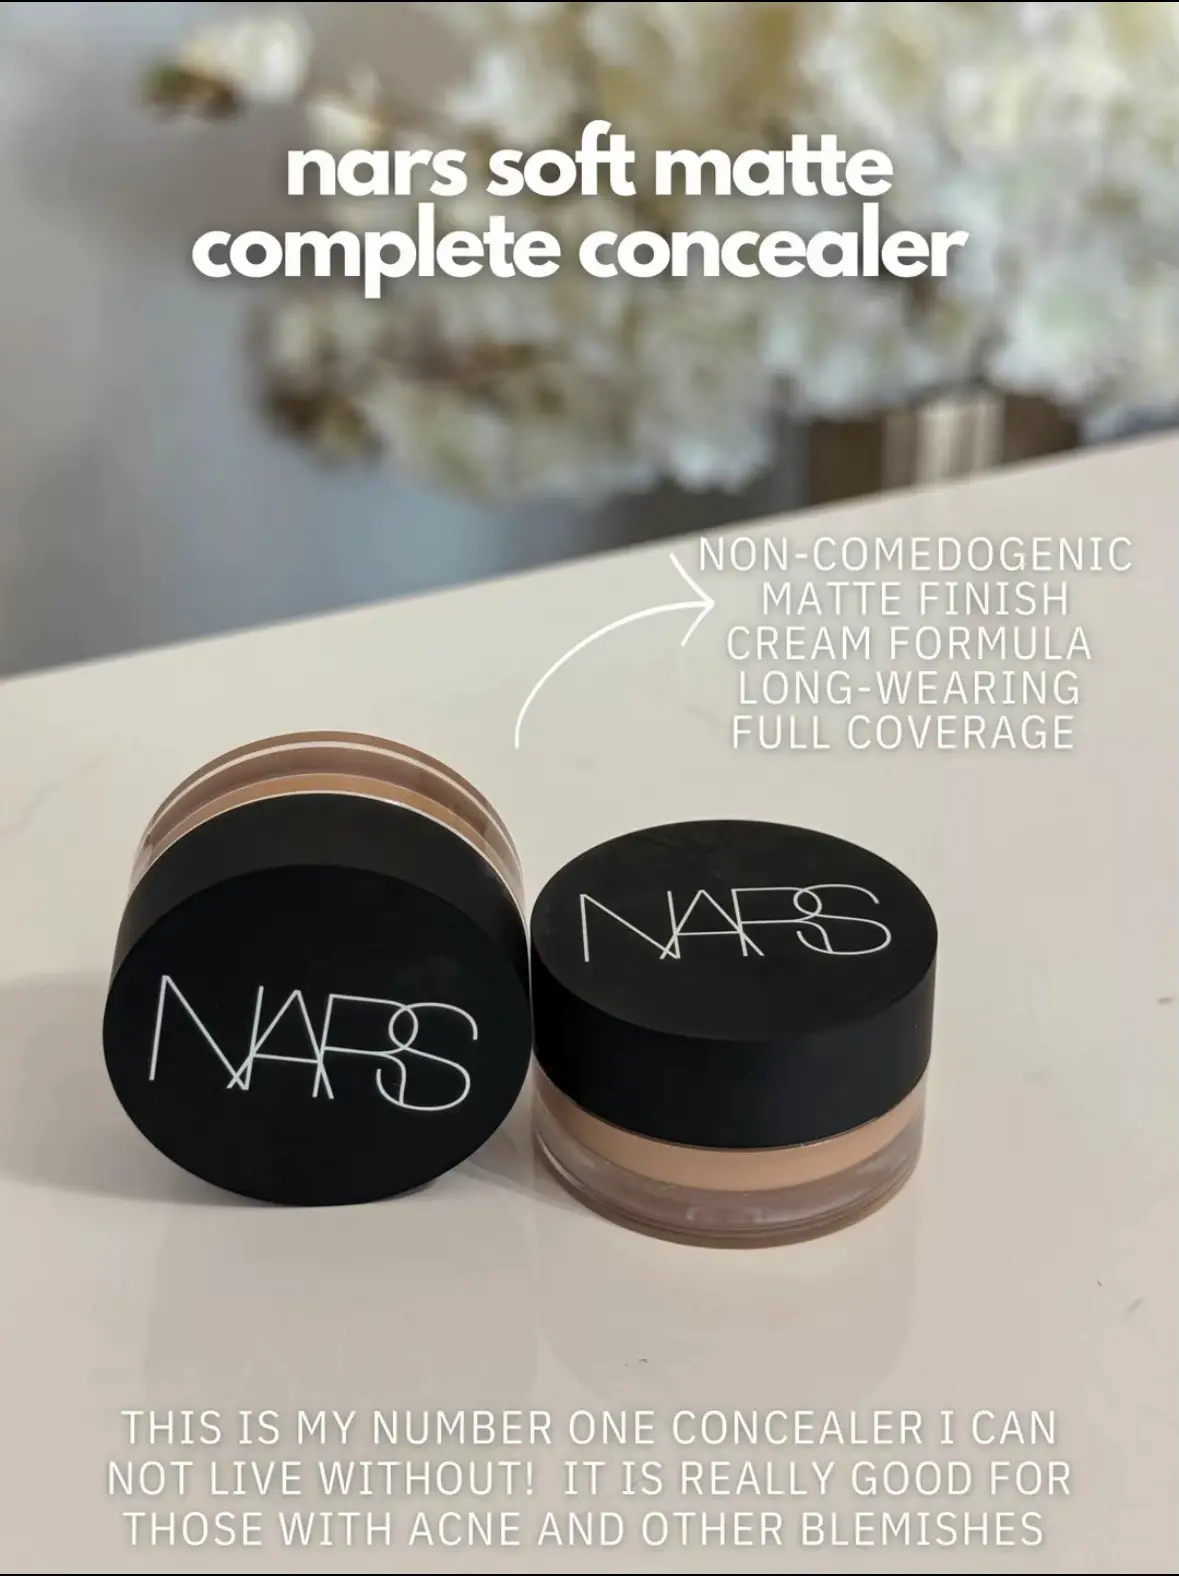 NARS Soft Matte complete concealer, by Waist Training Center